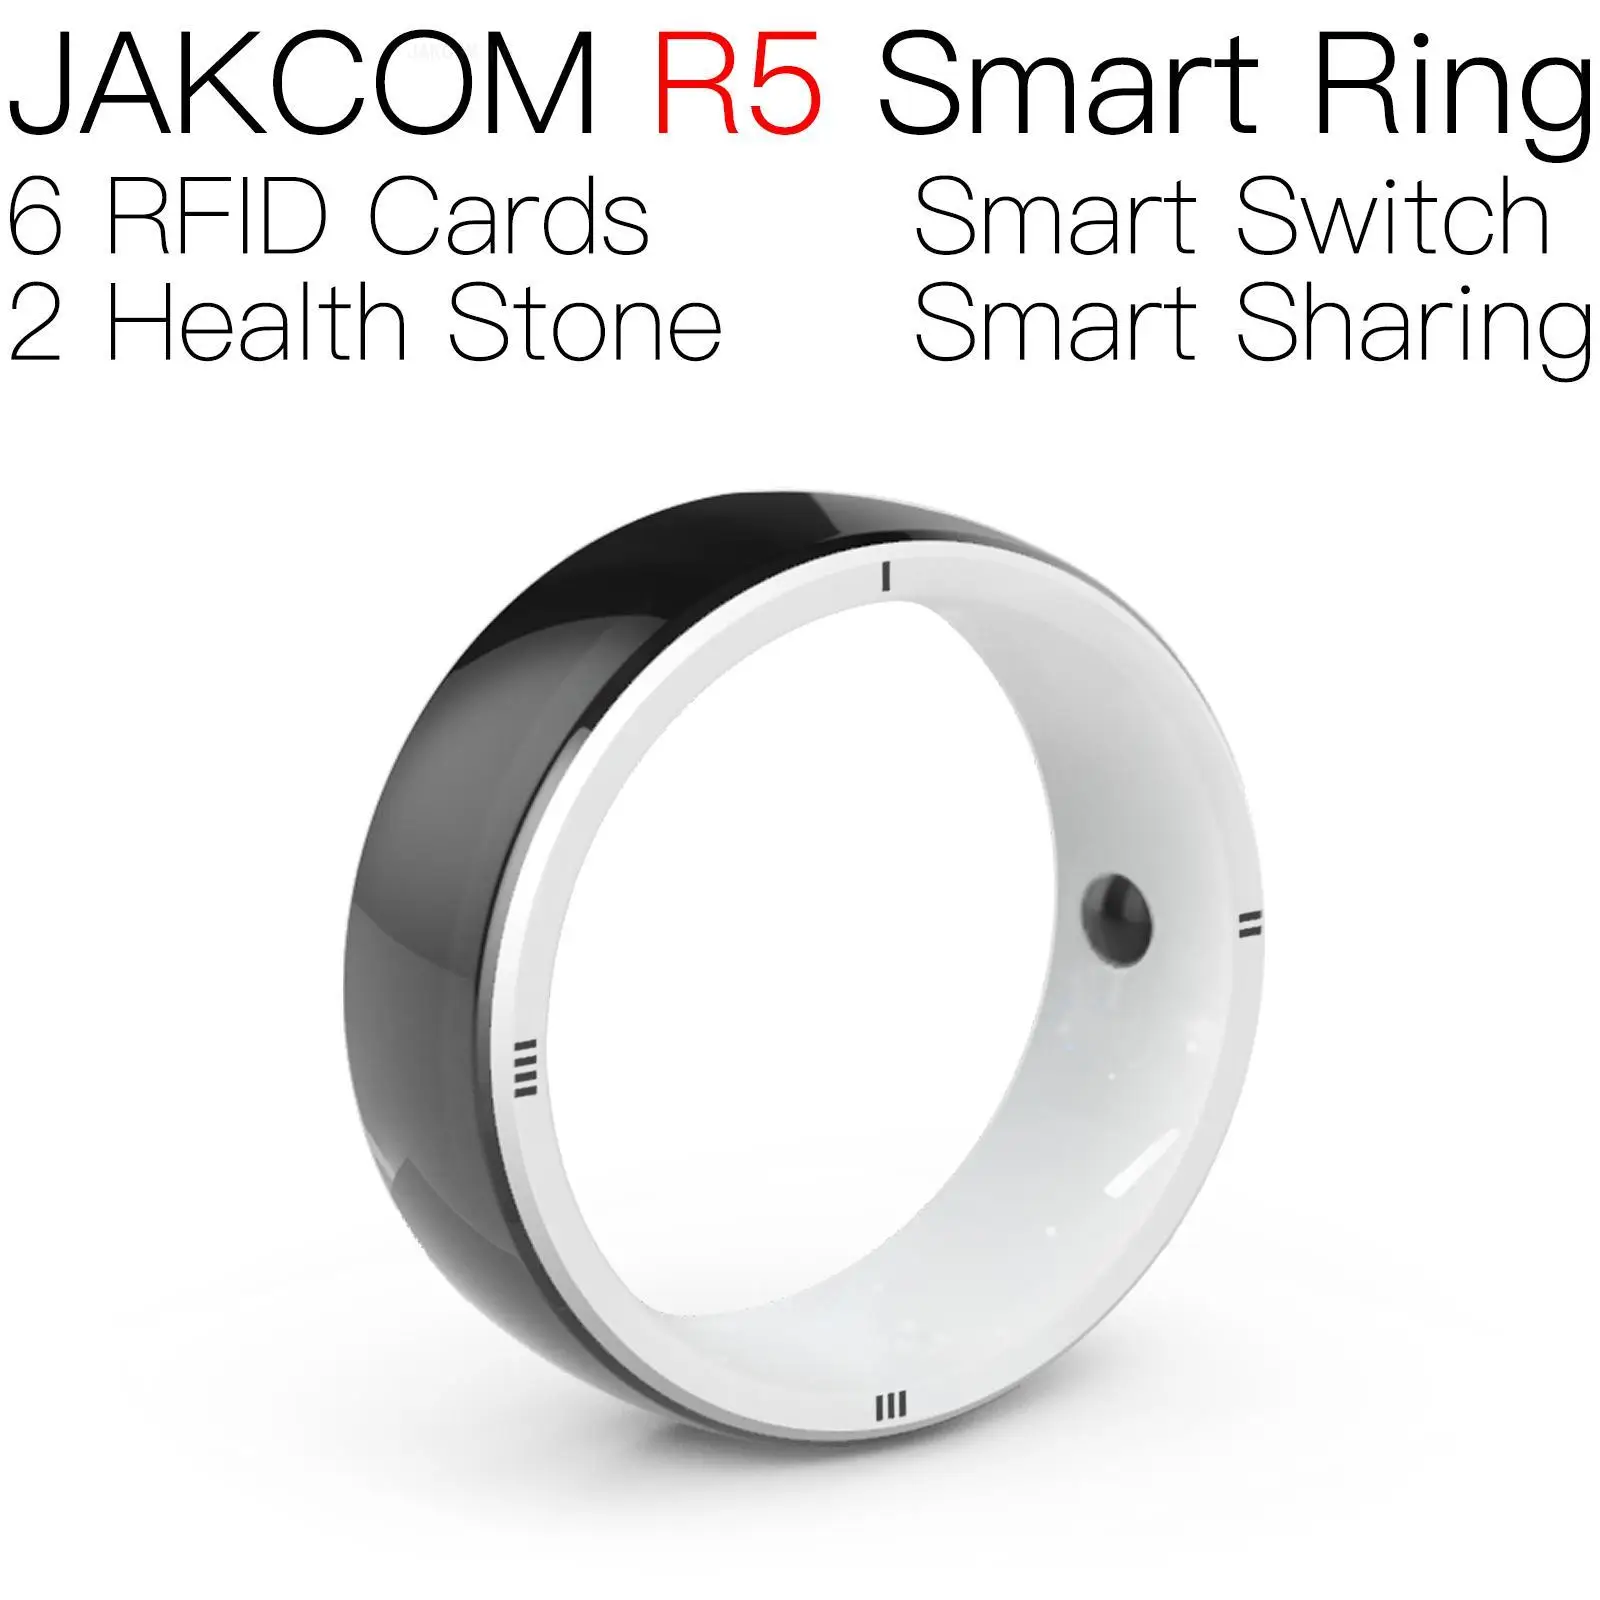 

JAKCOM R5 Smart Ring Nice than card flipper zero hacker 433 mhz f3 smart nfc nail flashing rfid tag writable